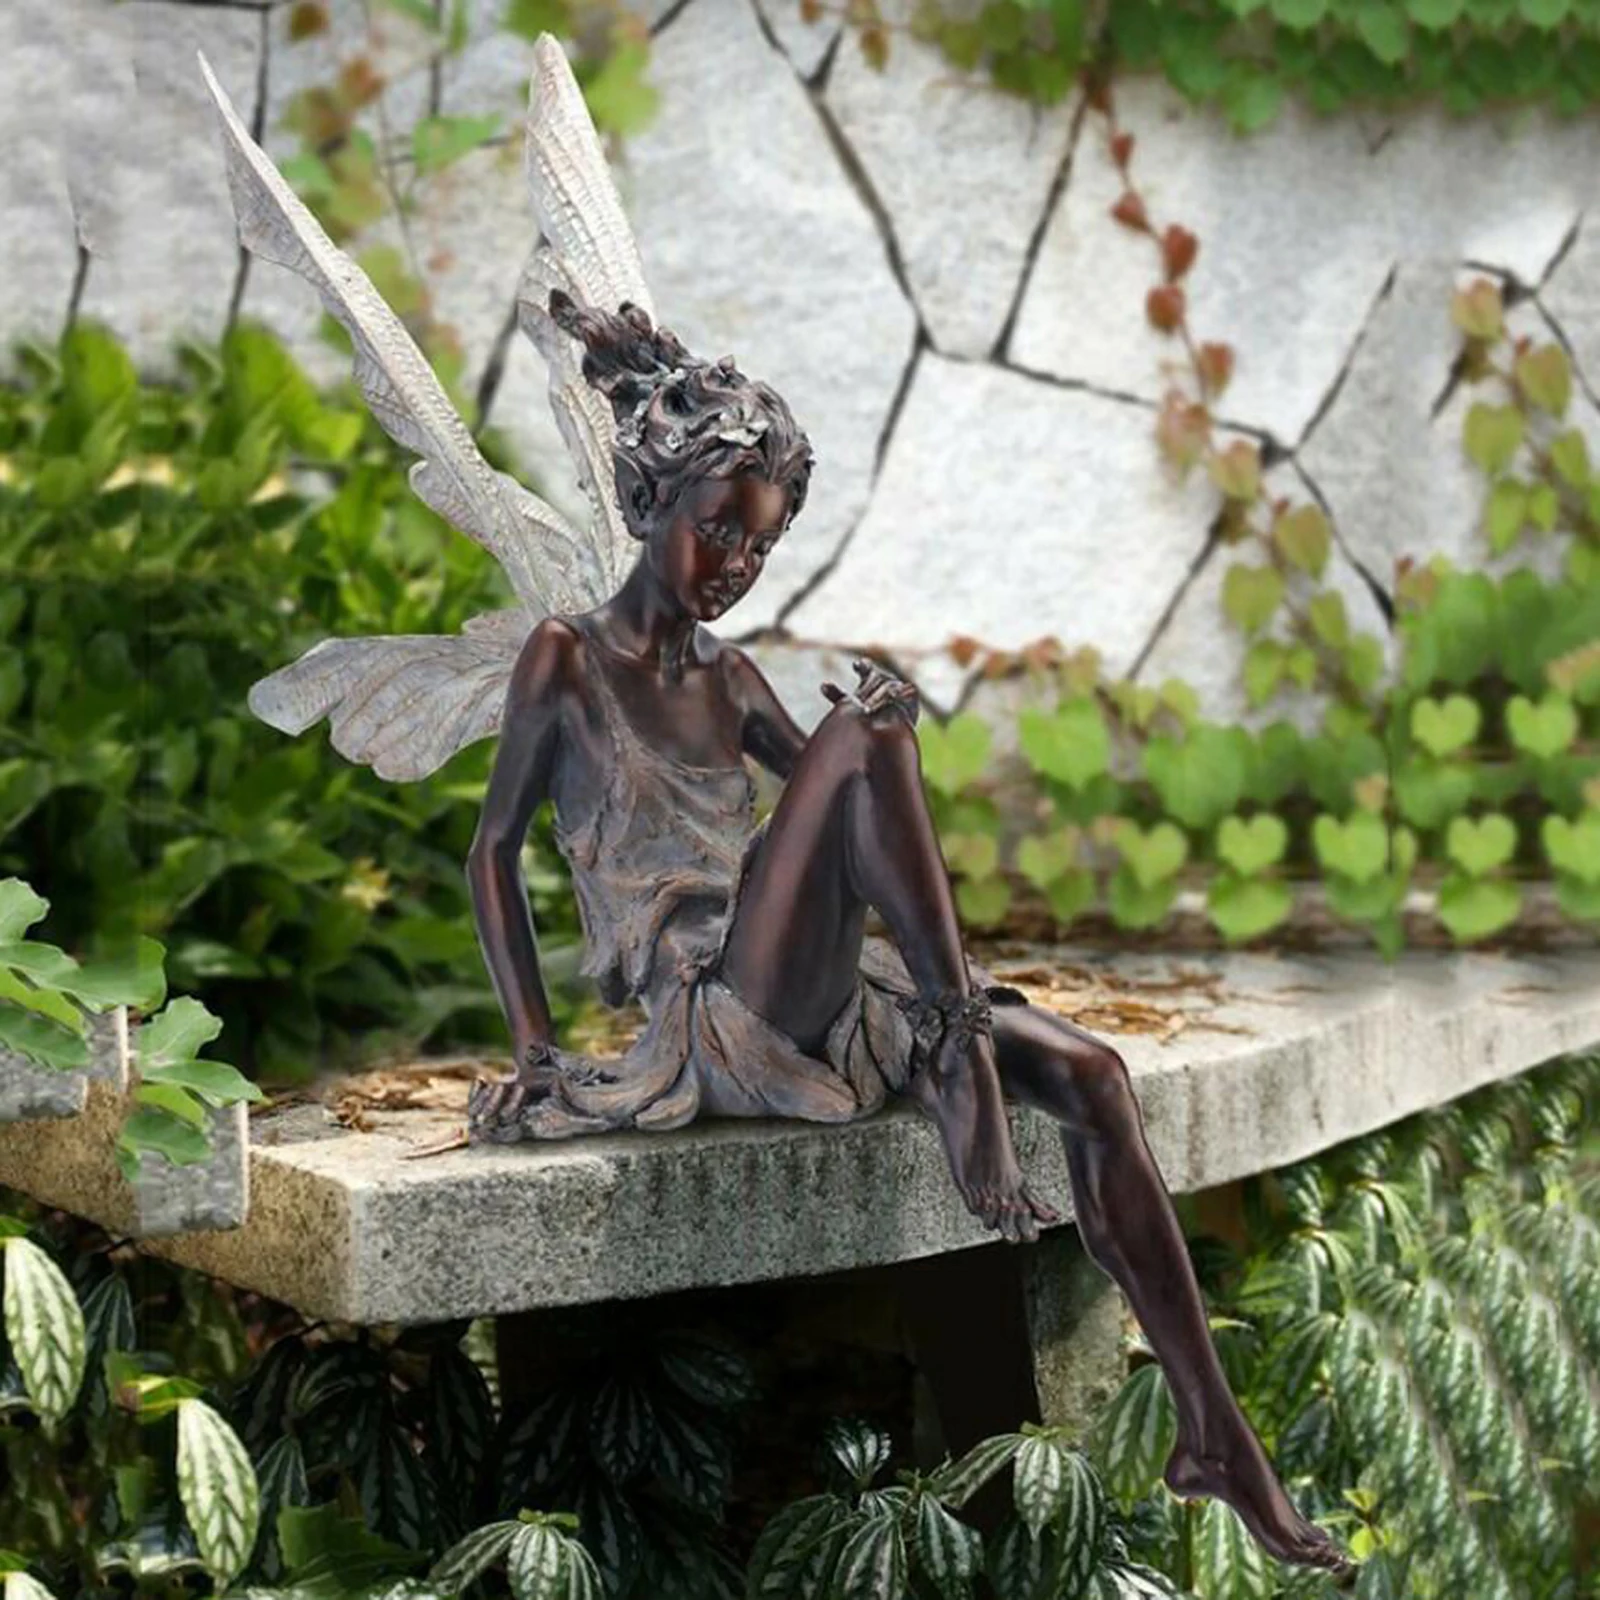 Charming Fairy Statue Pond Lawn Decorative Figurine Angel Sculpture Ornament